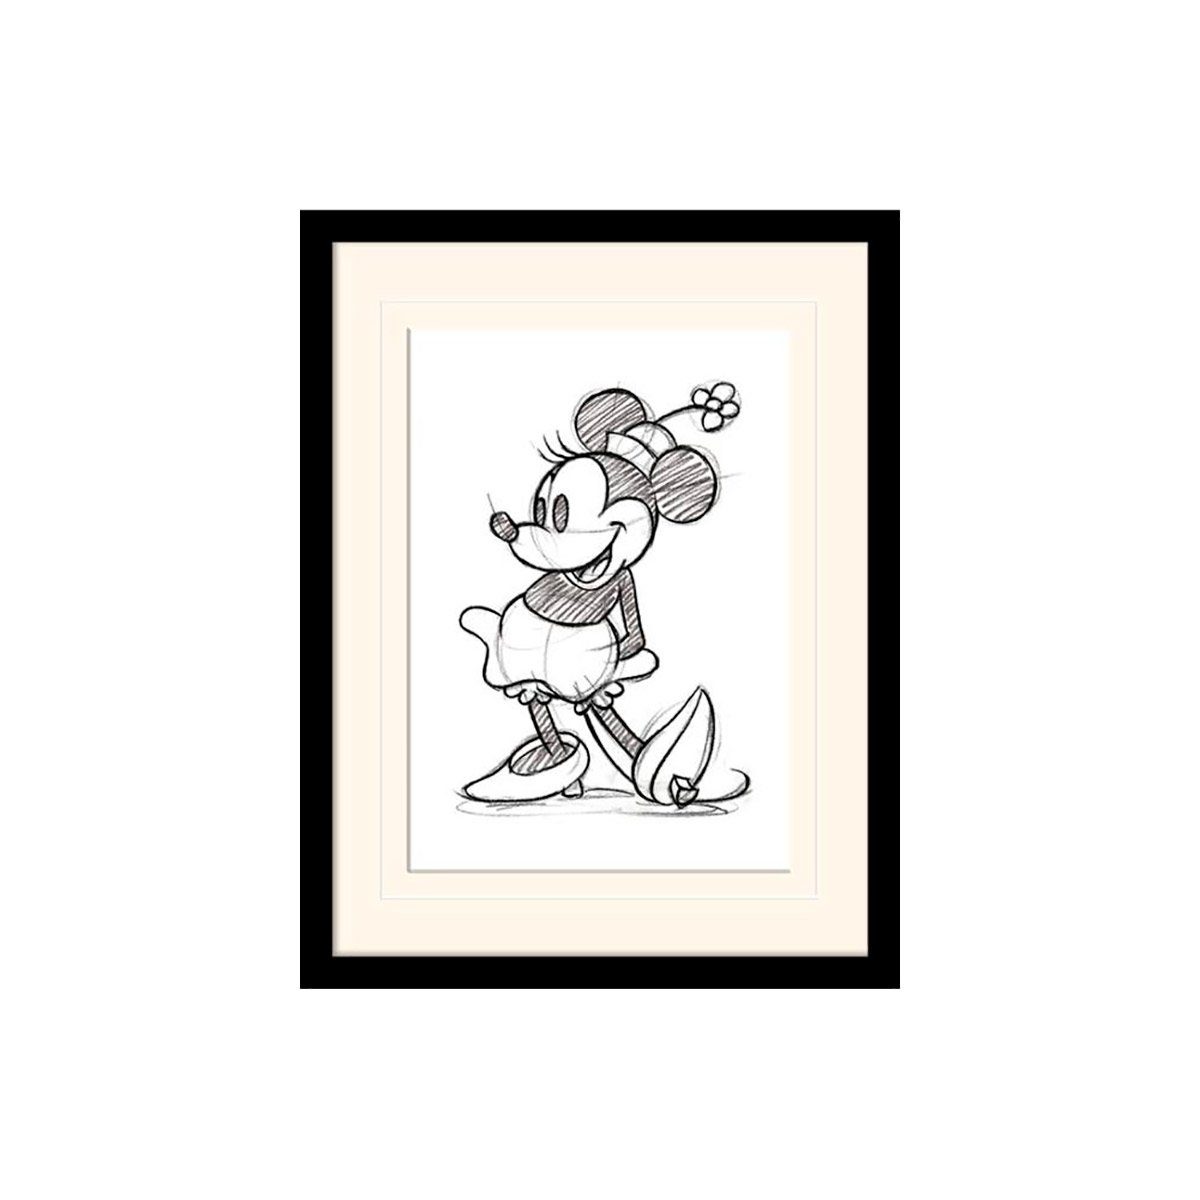 dem Disney Poster, Gerahmter Mouse Kunstdruck Disney Mickey aus